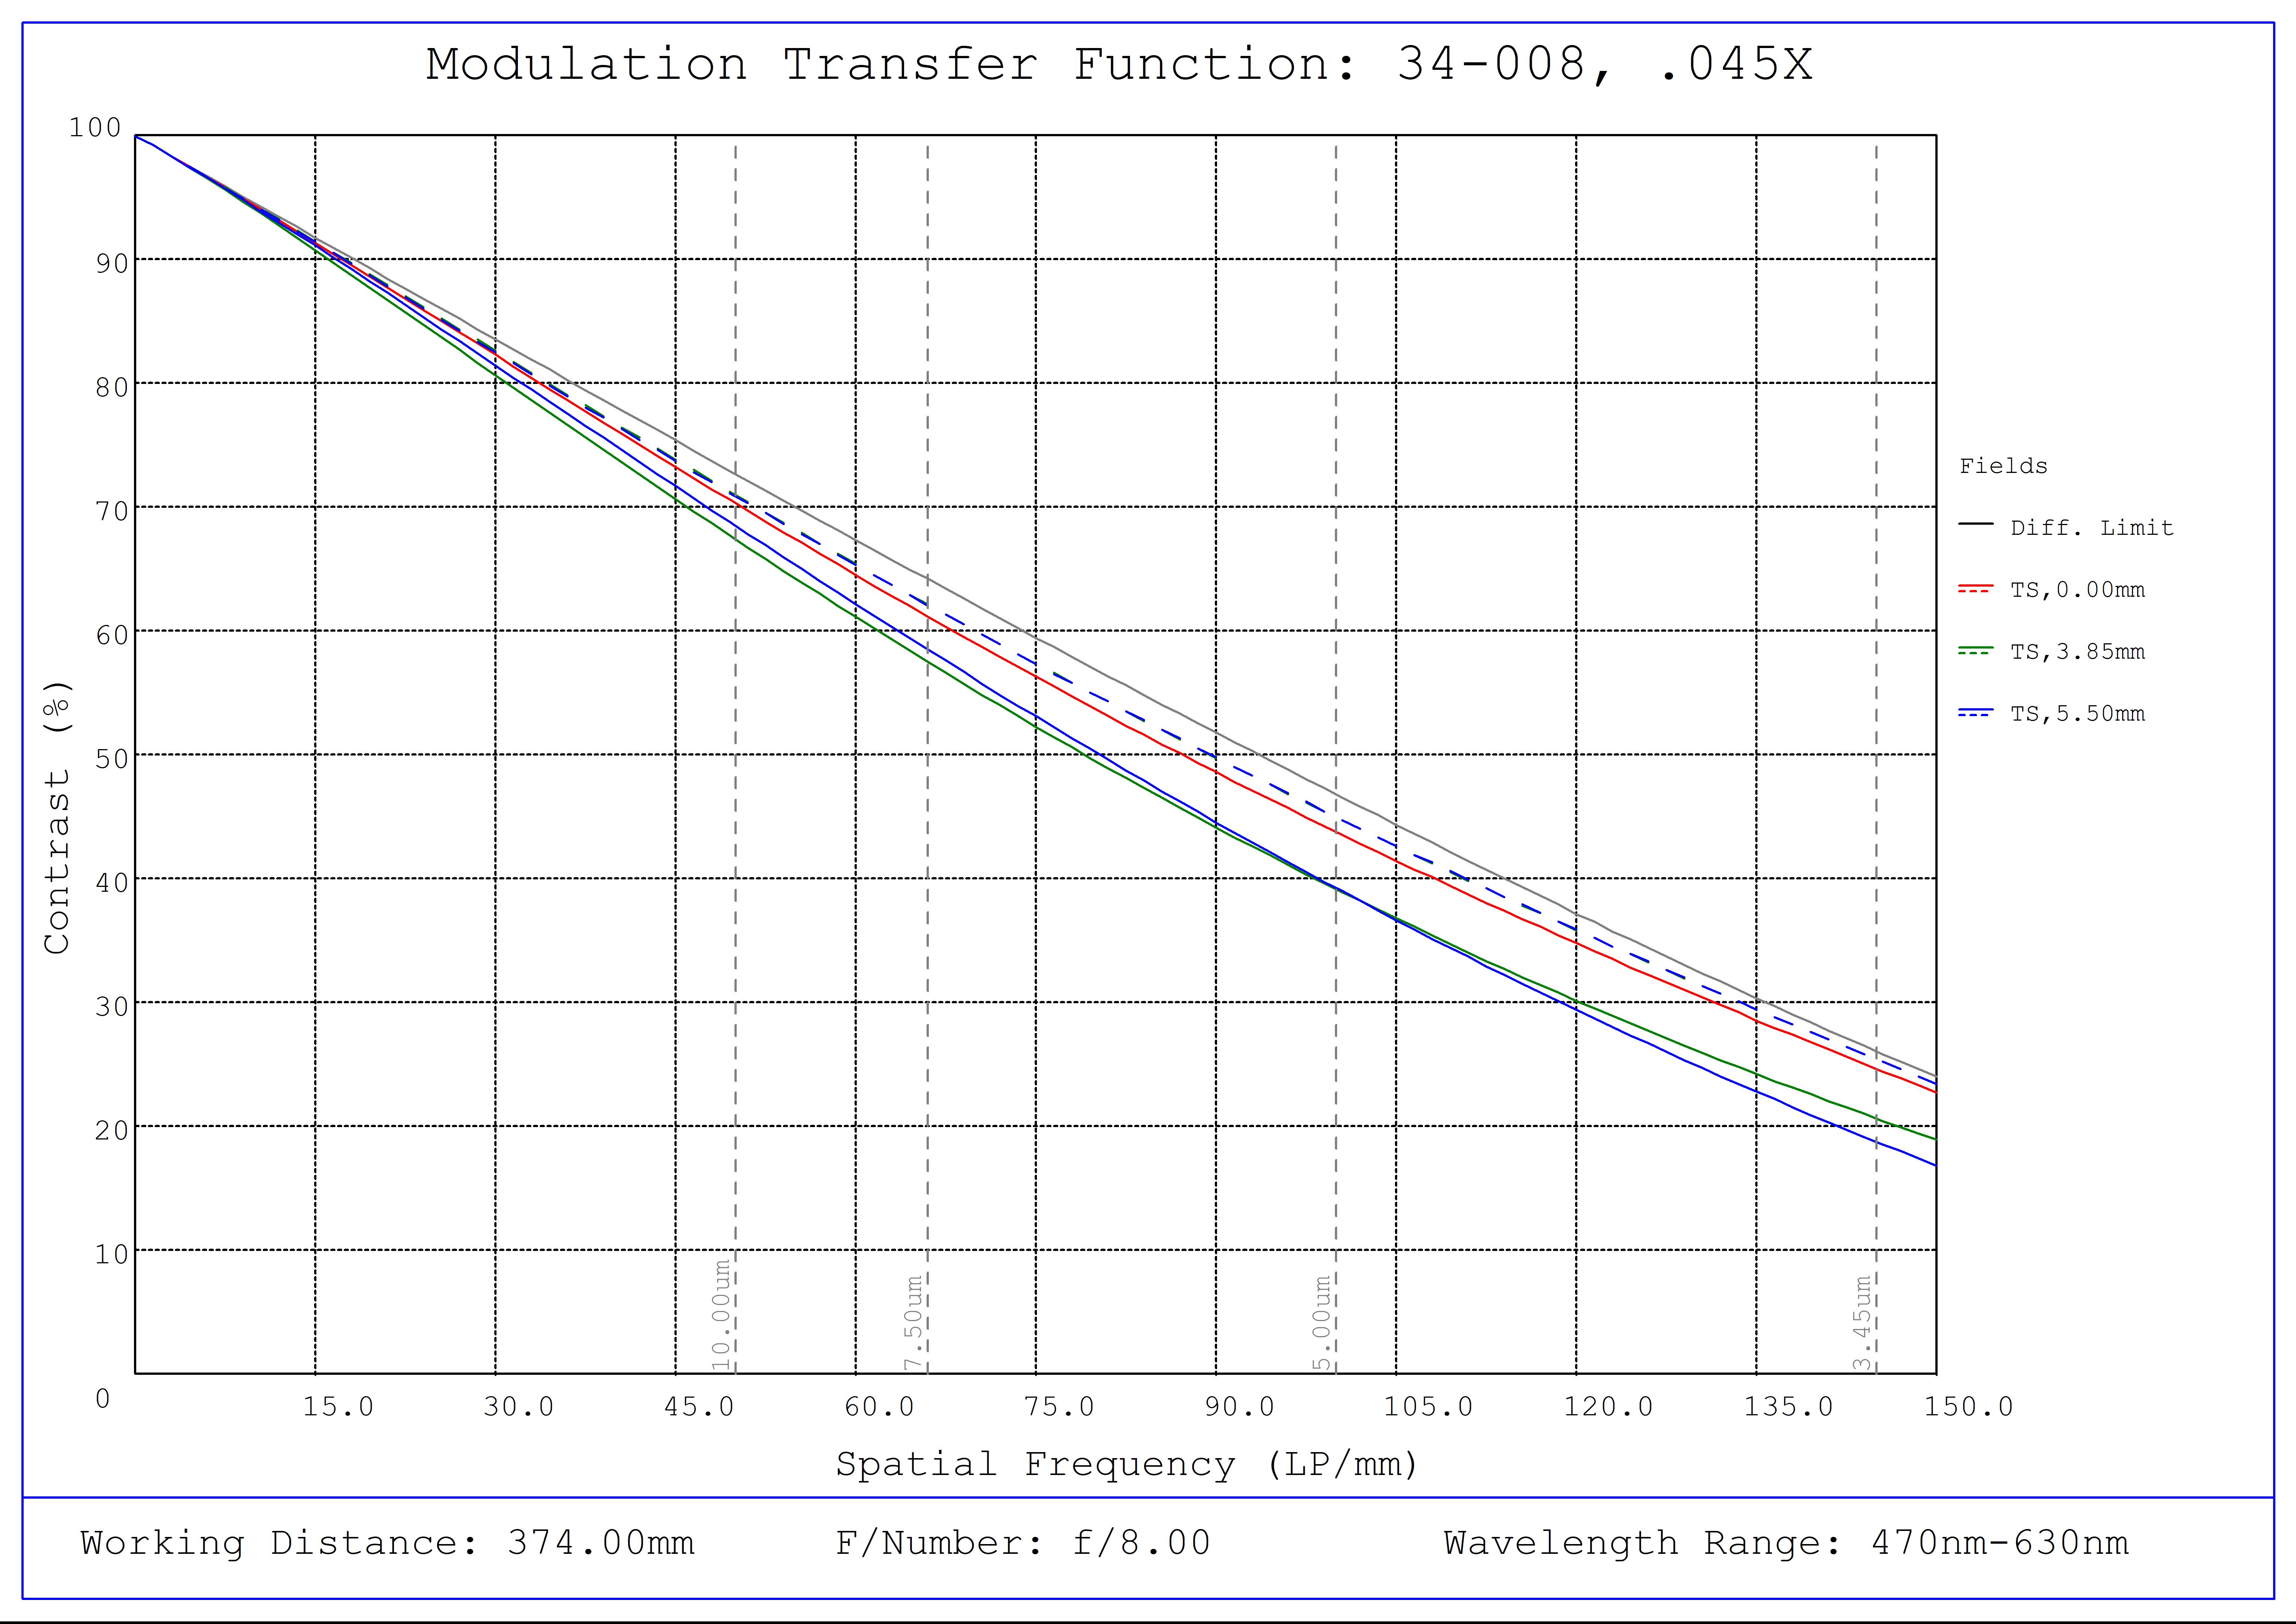 #34-008, 0.045X, 2/3" C-Mount TitanTL® Telecentric Lens, Modulated Transfer Function (MTF) Plot, 374mm Working Distance, f8